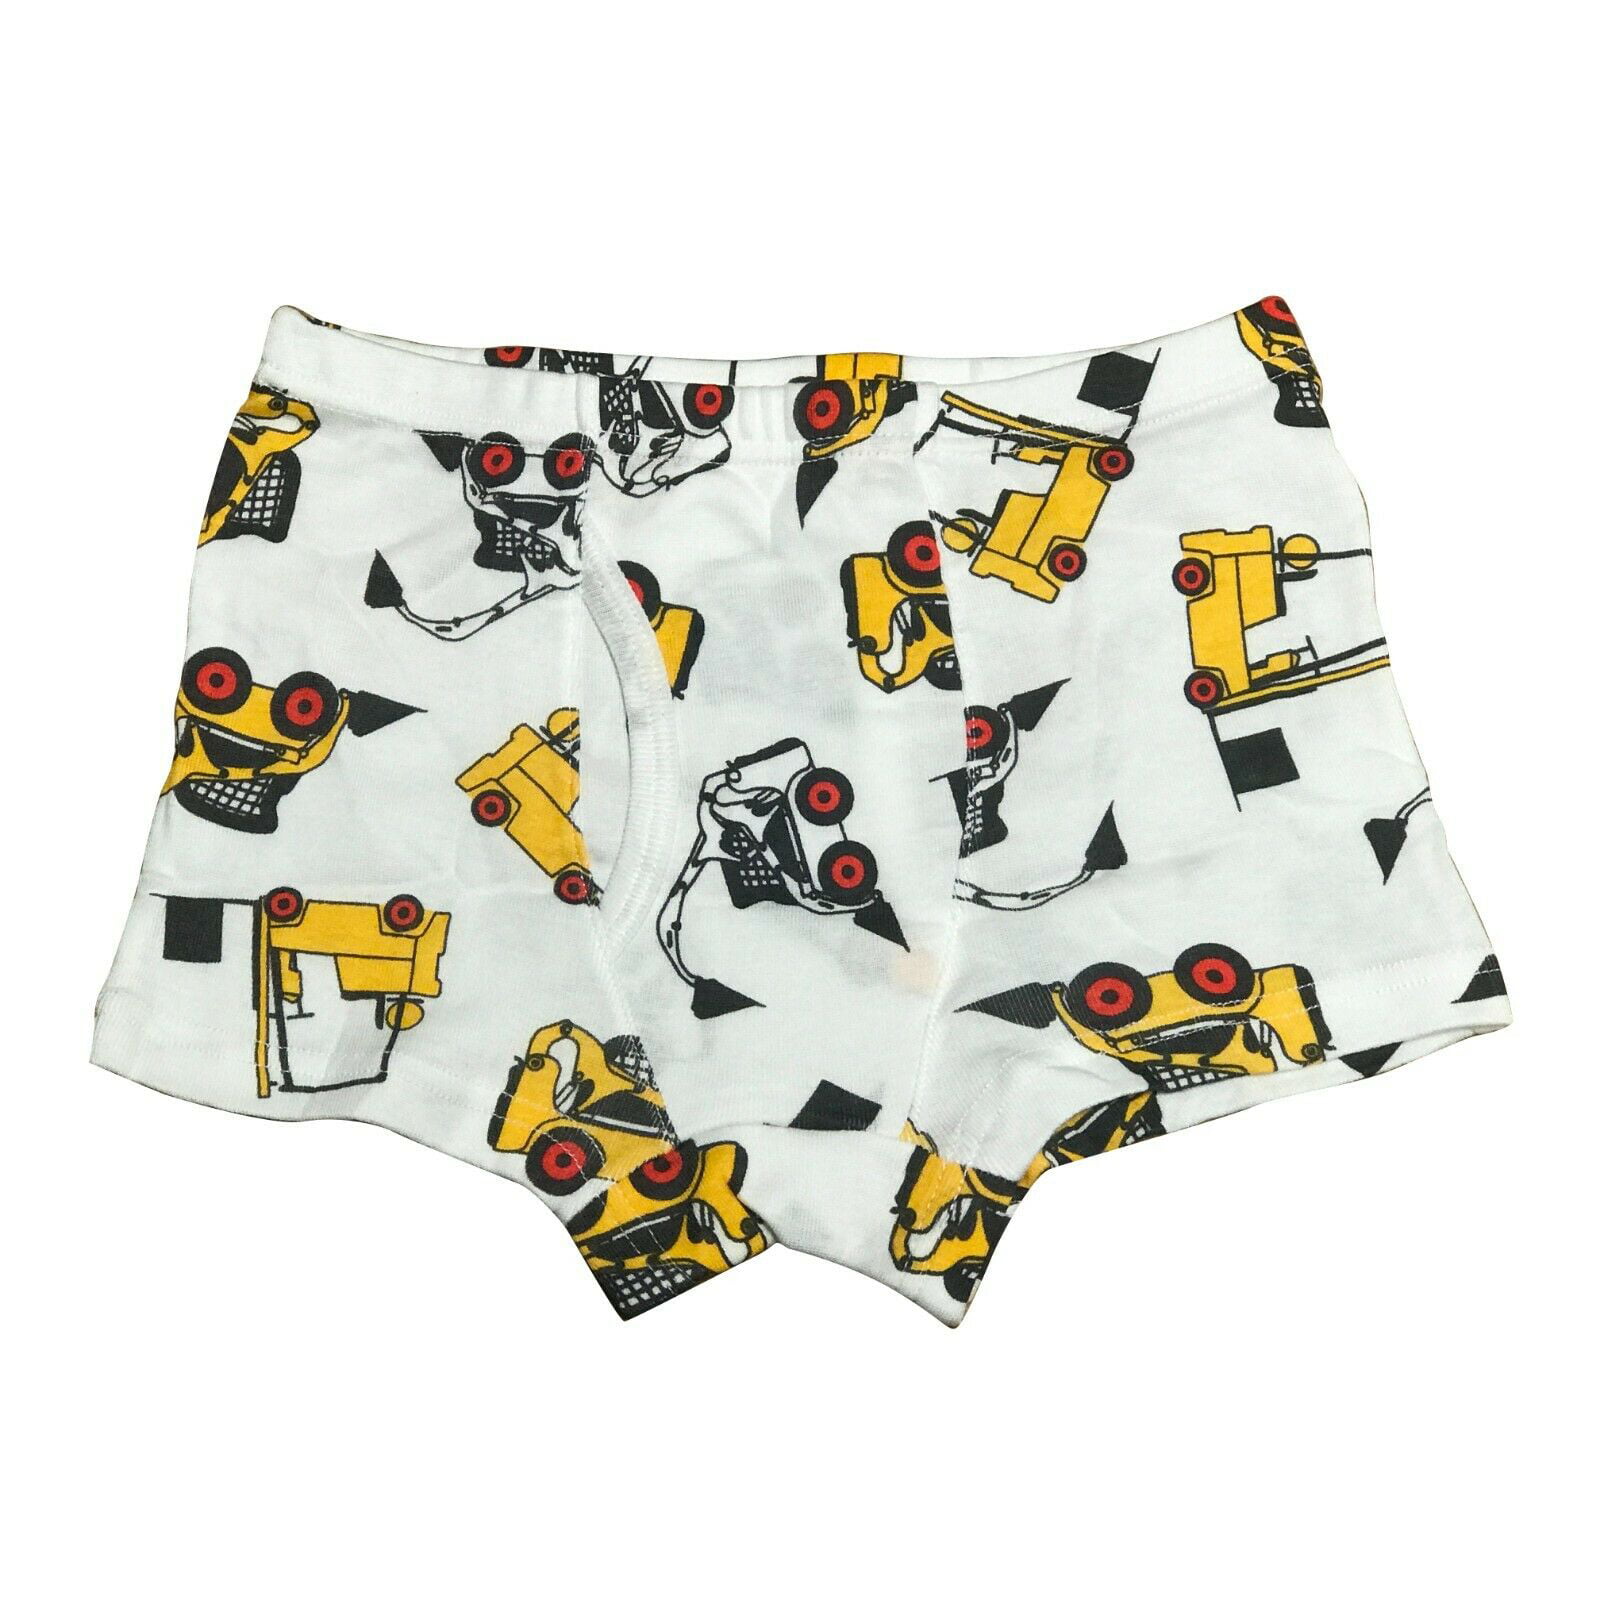 6 PK Cotton Toddler Little Boys Kids Underwear Boxer Briefs Underpants Size 4T 5T 6T 7T 8T Kleding Jongenskleding Ondergoed 